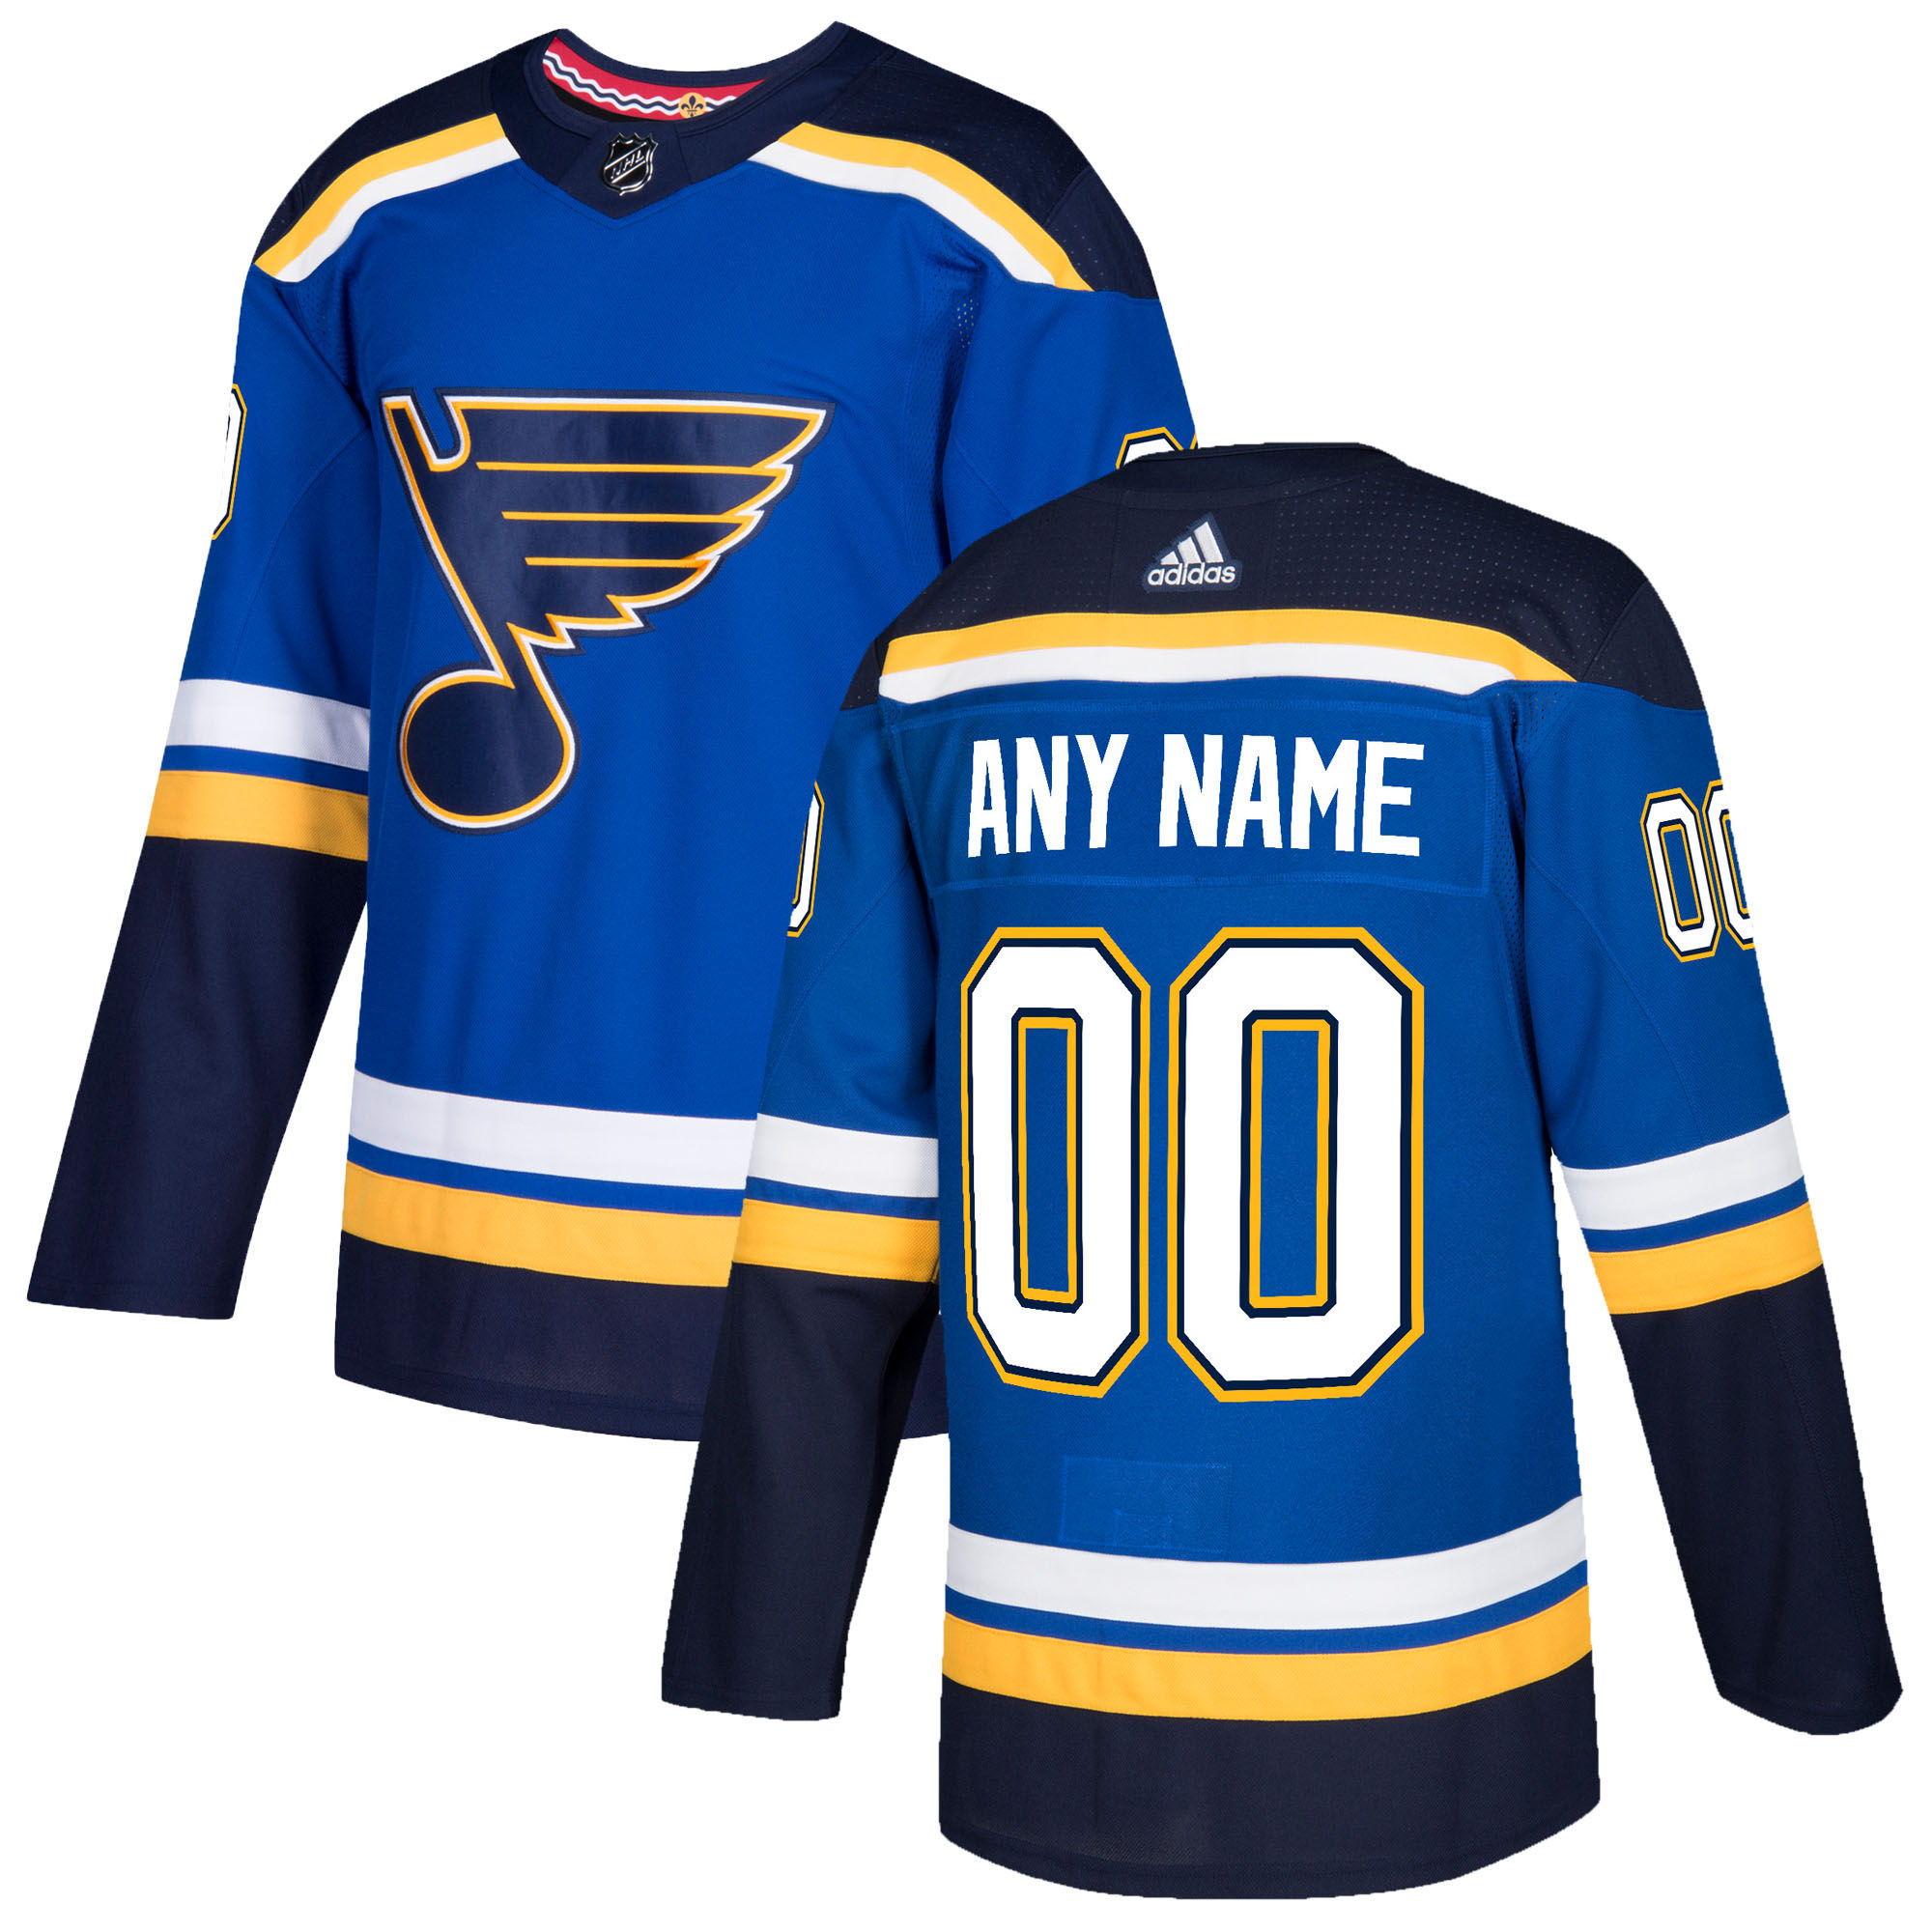 Custom Men's Adidas St. Louis Blues Blue 2017-2018 Hockey Stitched NHL Jersey